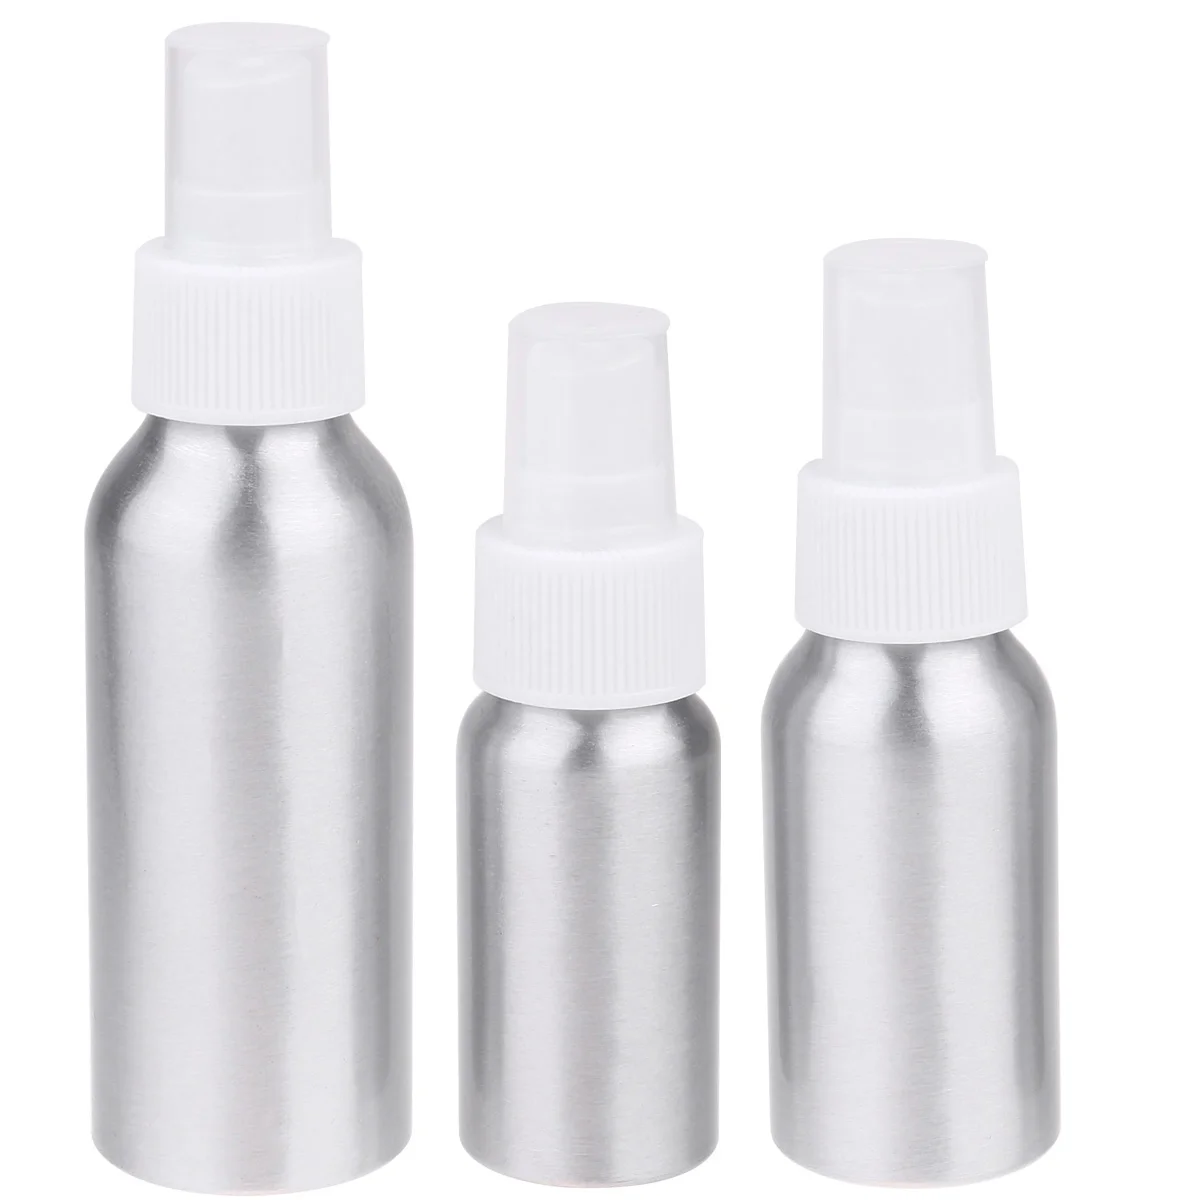 

Bottle Spray Travel Bottles Makeup Perfume Aromatherapy Size Container Aluminum Toiletry Metal Atomizer Portable